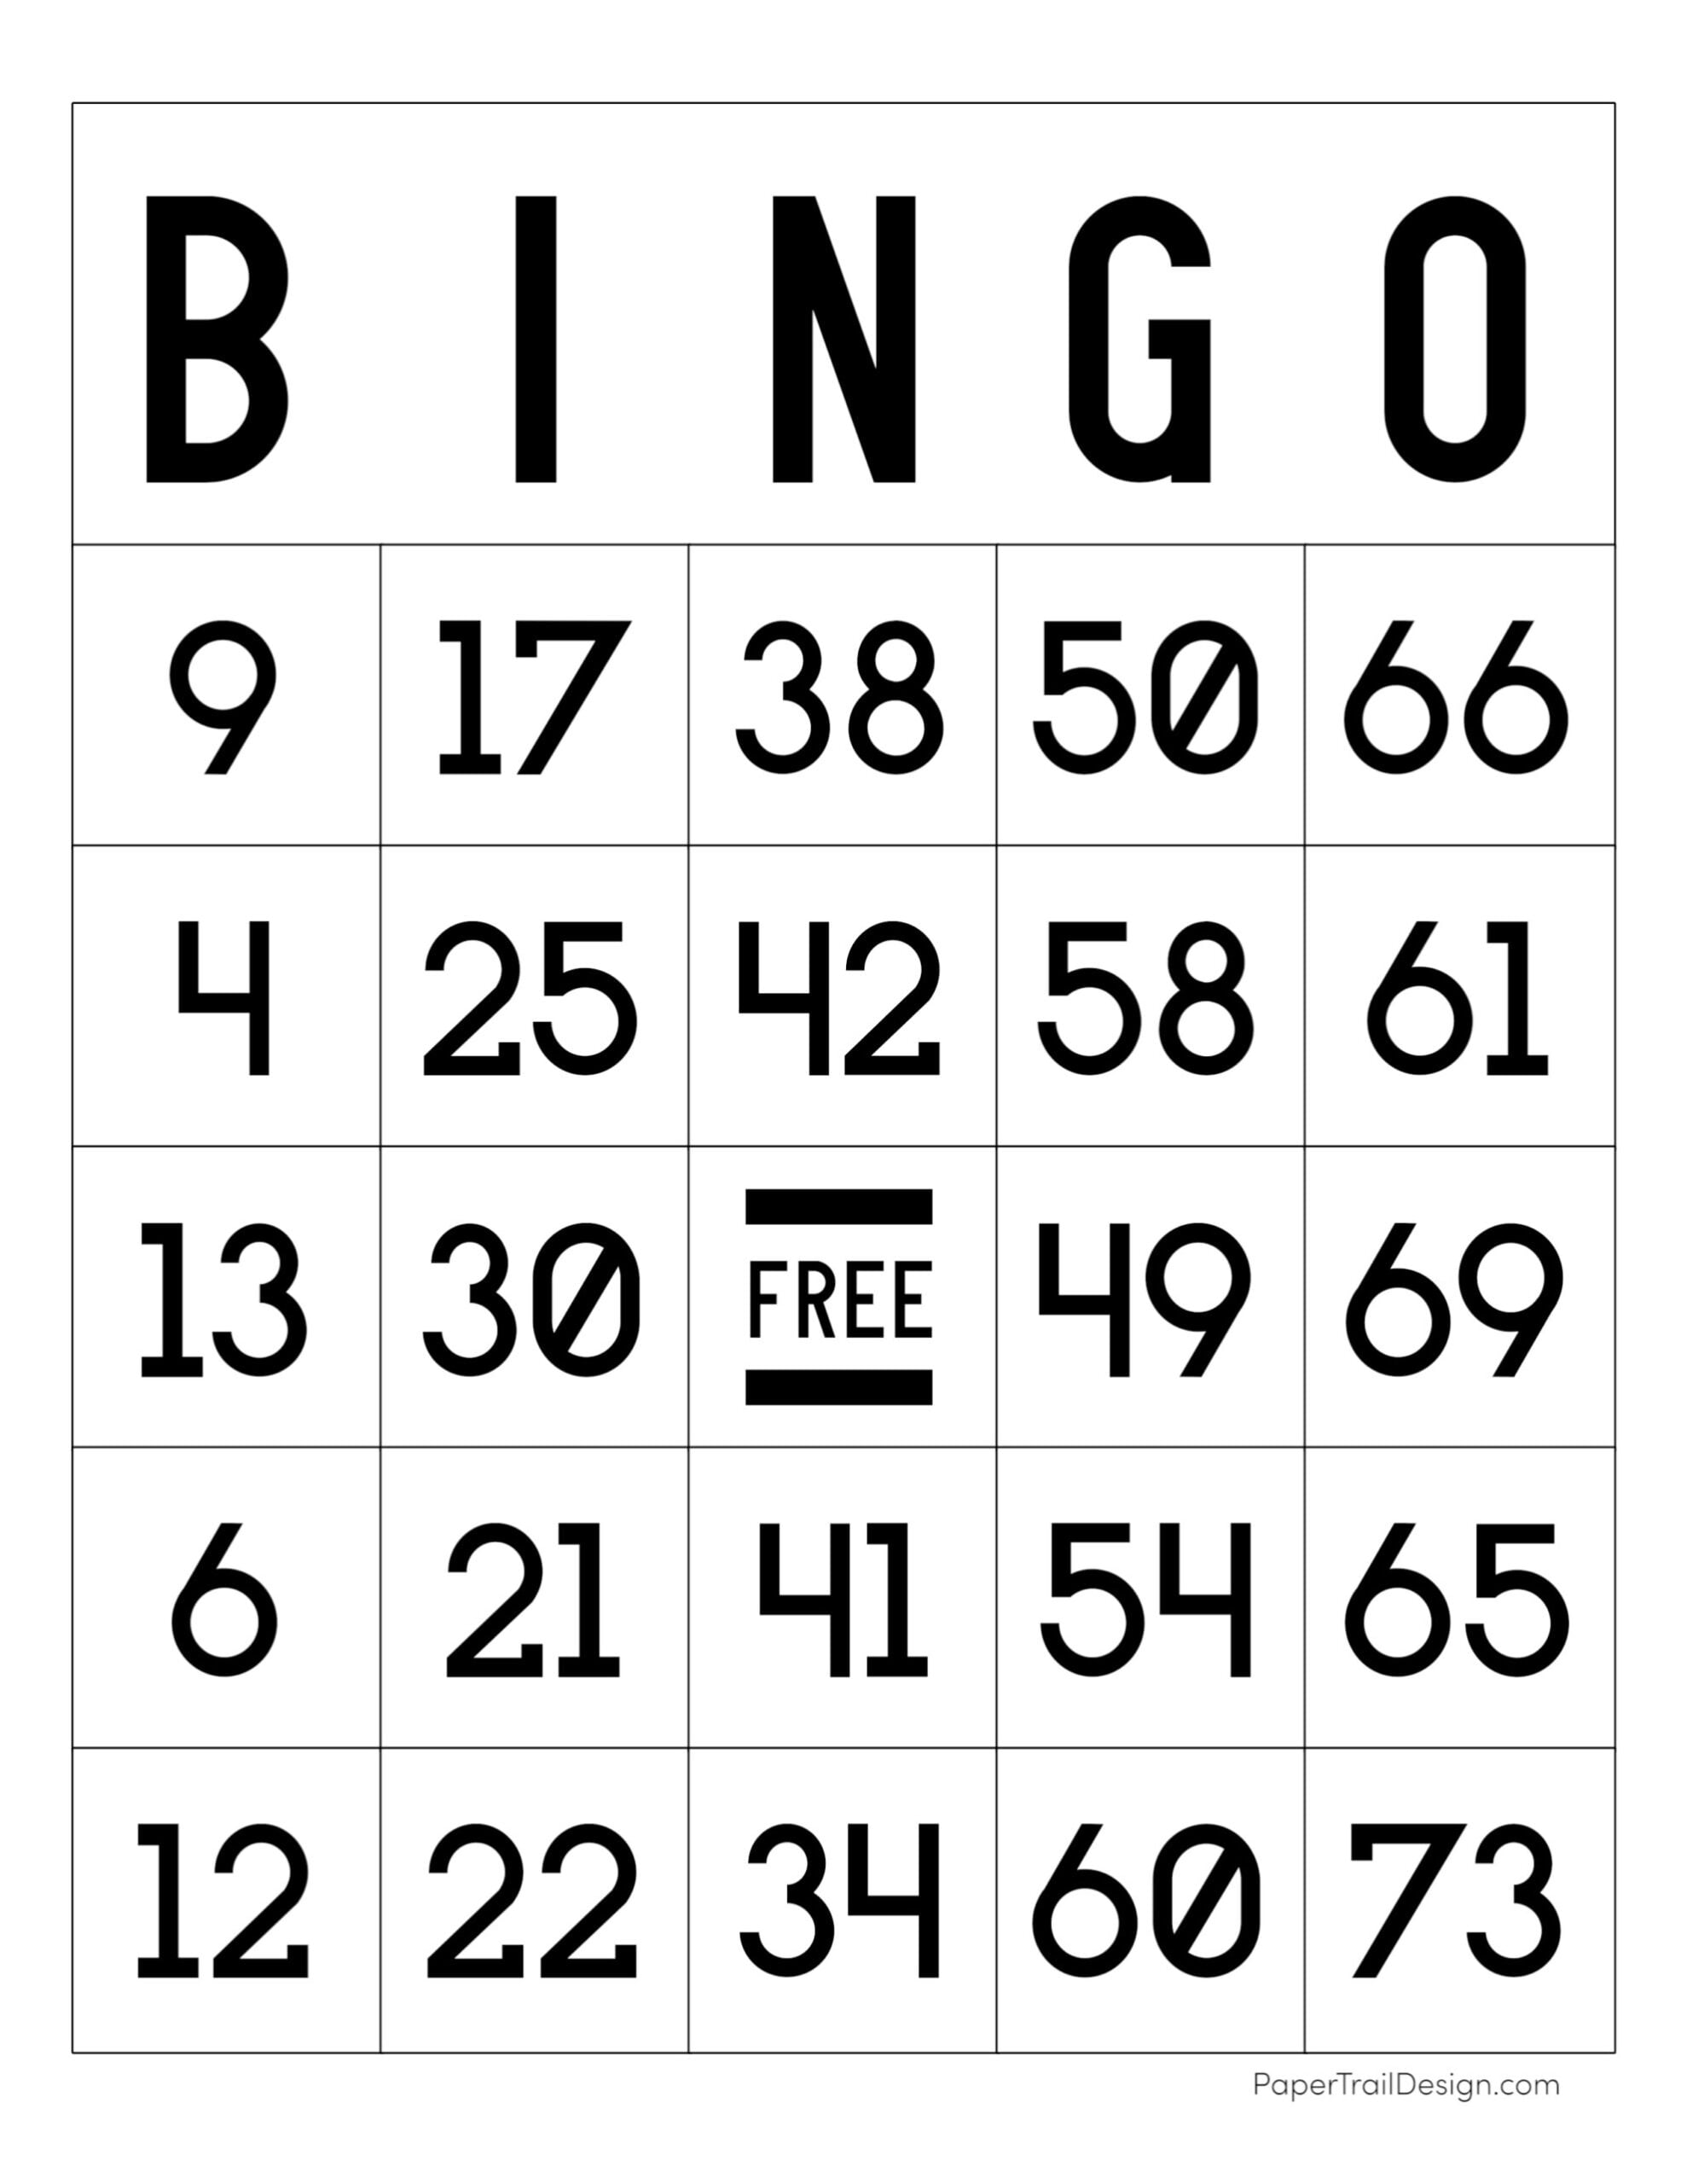 Printable Bingo Cards 0-75